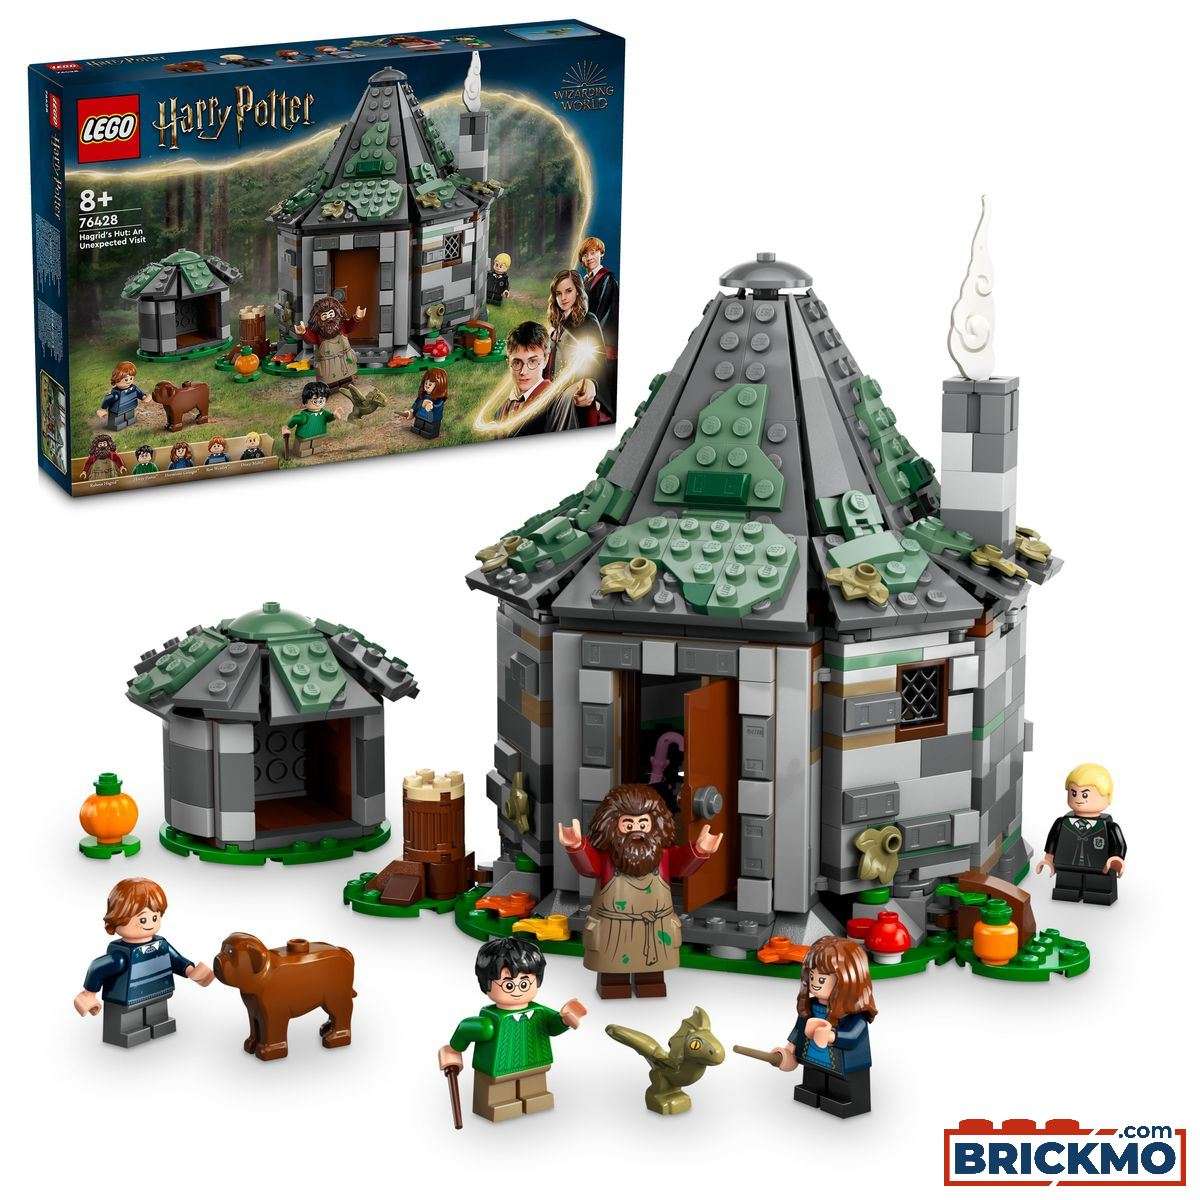 LEGO Harry Potter 76428 A Cabana de Hagrid: Uma Visita Inesperada 76428